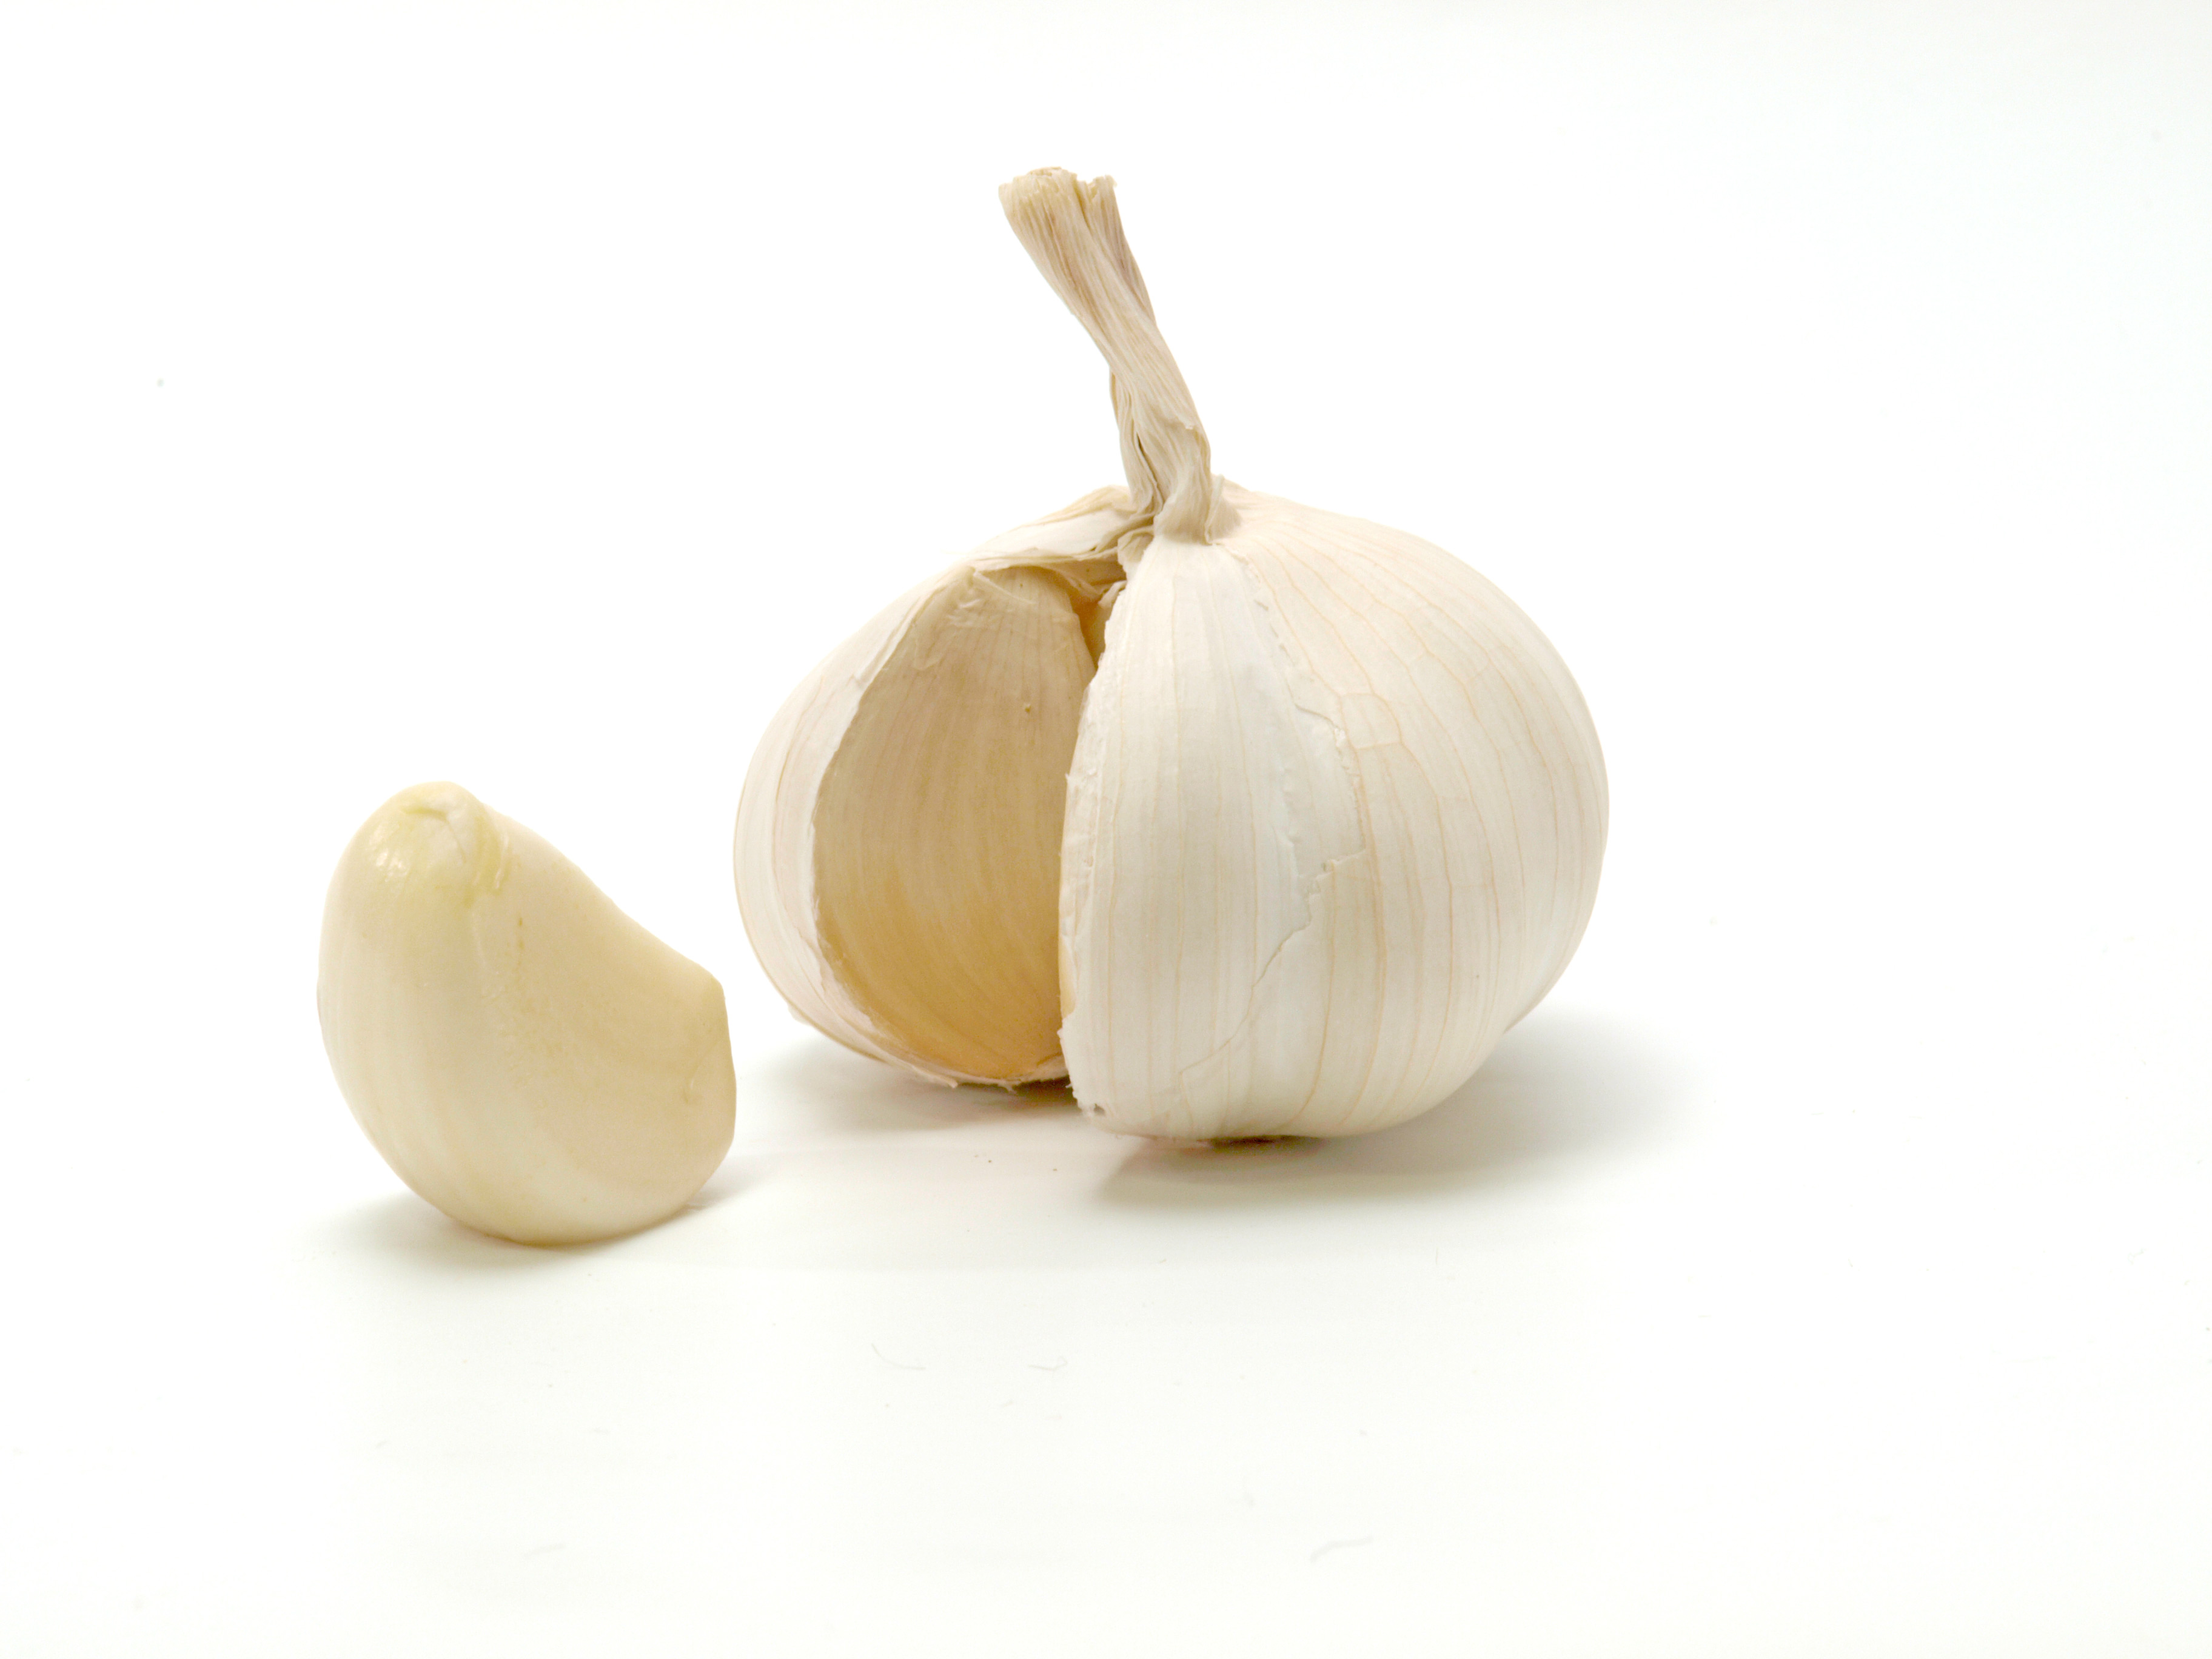 File:Opened garlic bulb with garlic clove.jpg - Wikimedia Commons